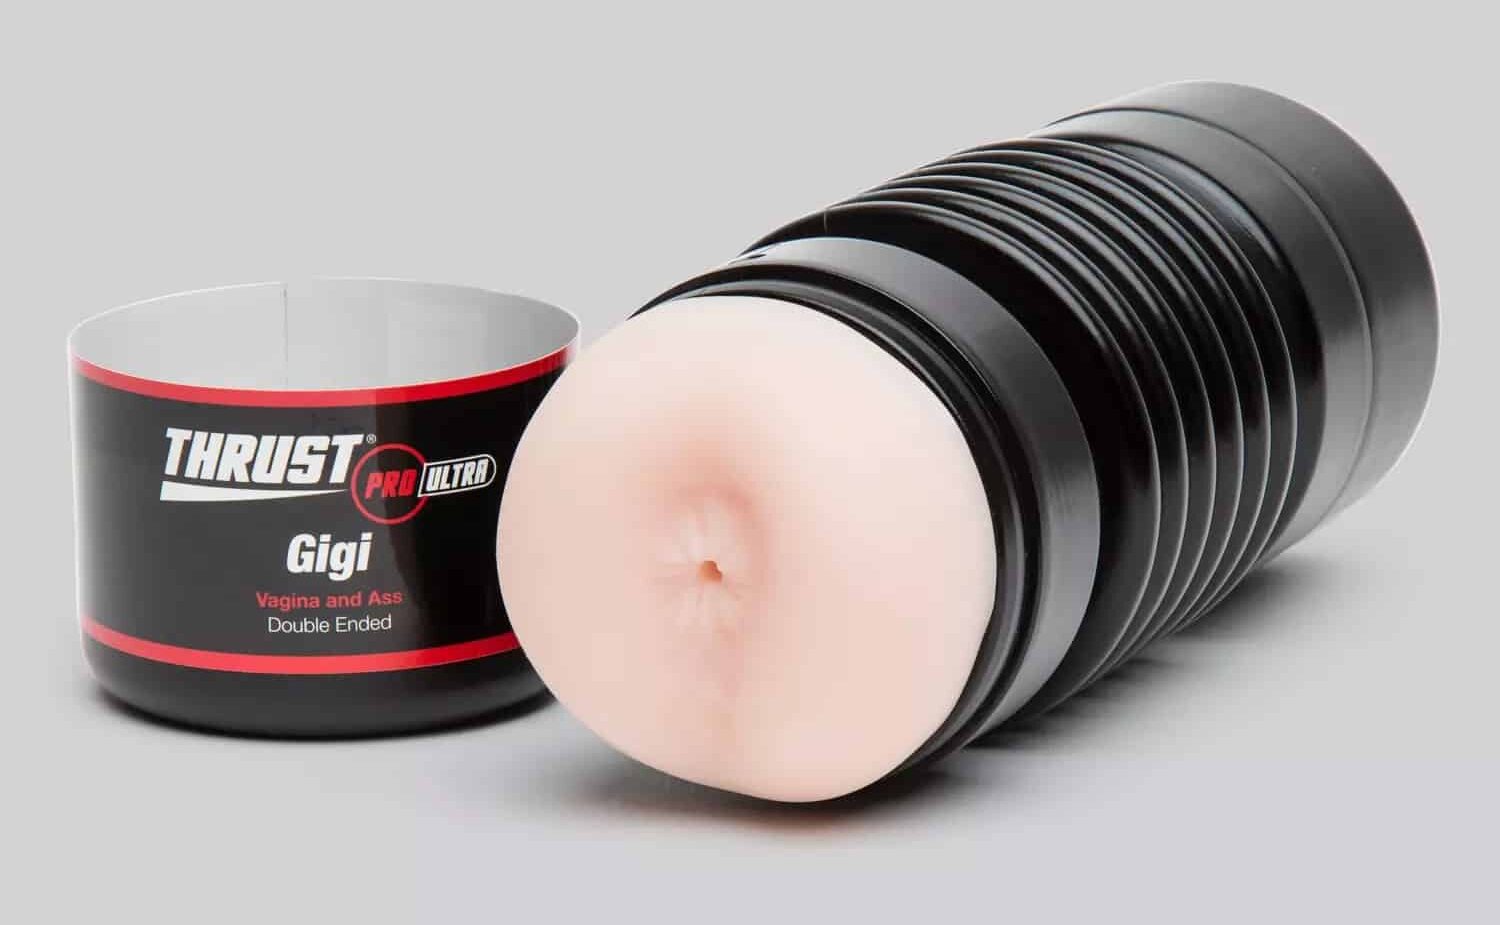 THRUST Pro Ultra Gigi Realistic Vagina and Ass. Slide 3